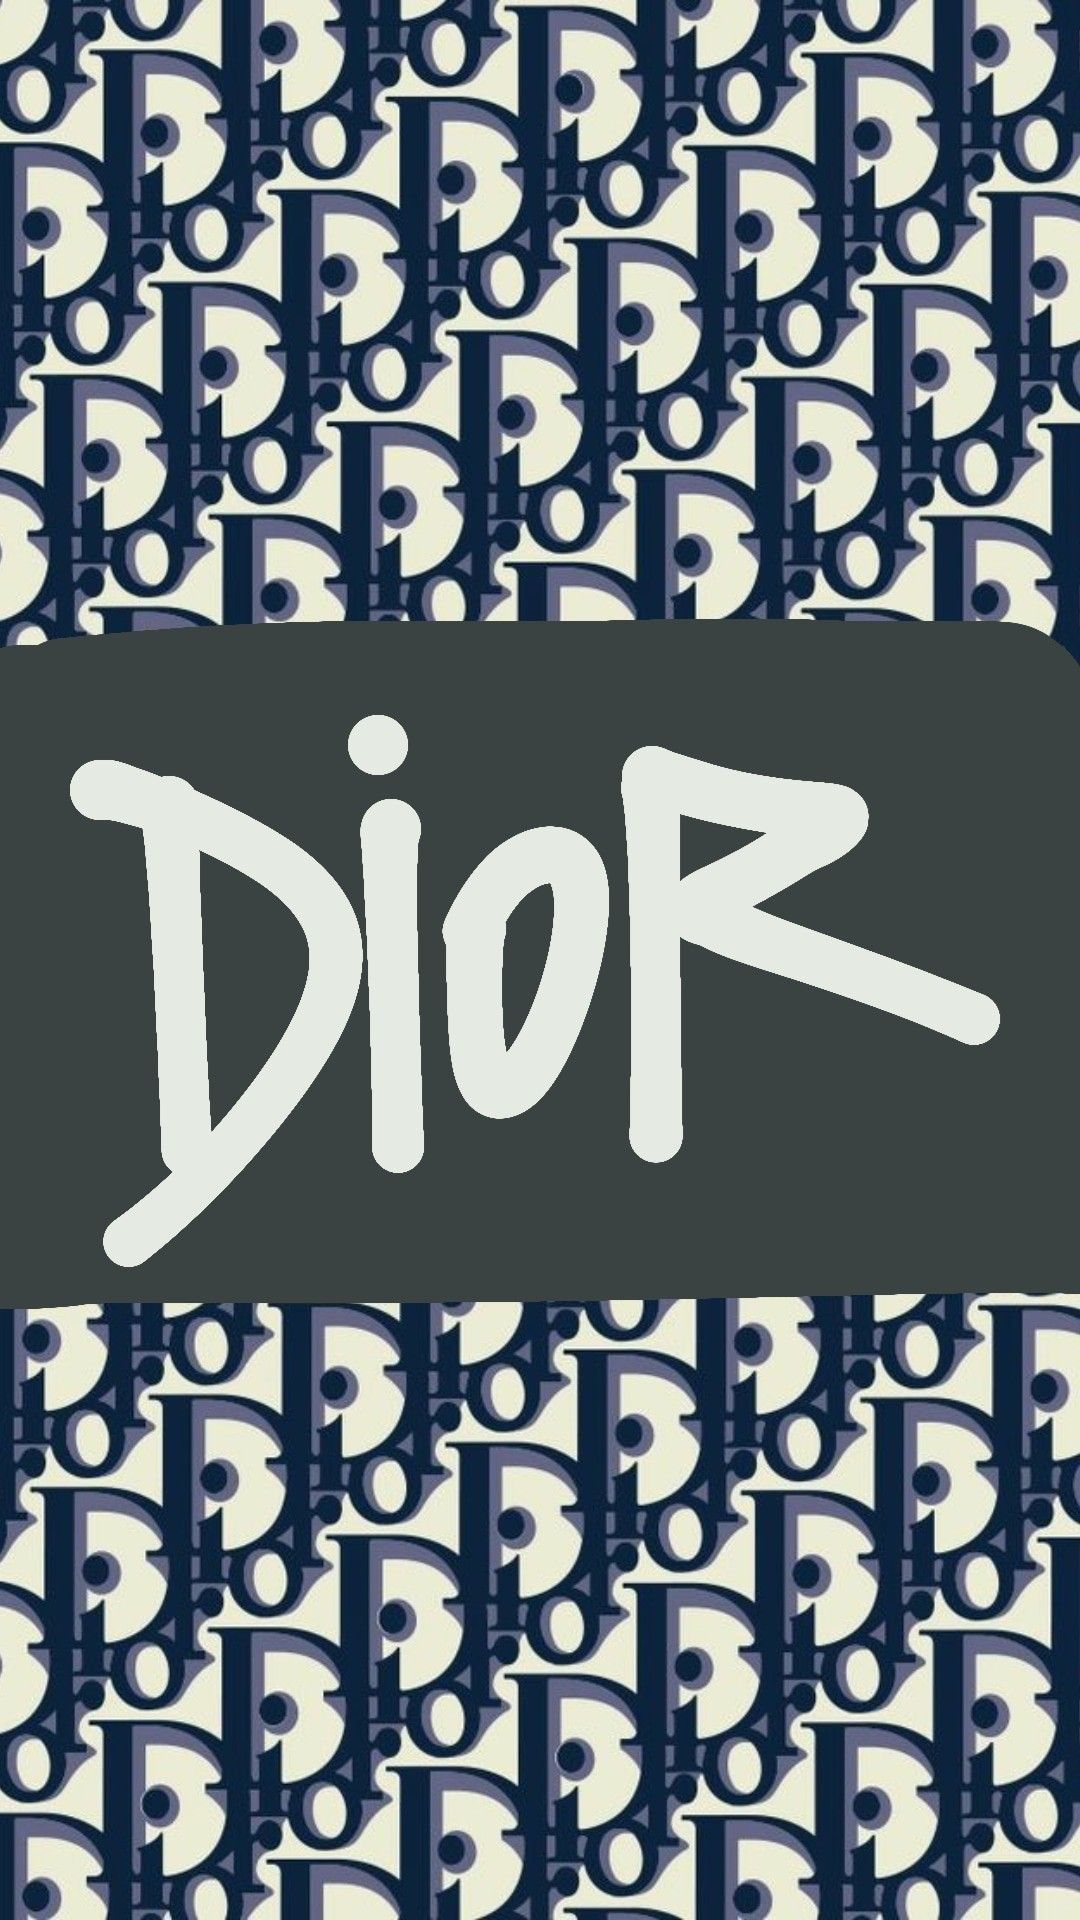 Download wallpapers Dior logo white background Dior 3d logo 3d art Dior  brands logo white 3d Dior logo for desktop free Pictures for desktop free